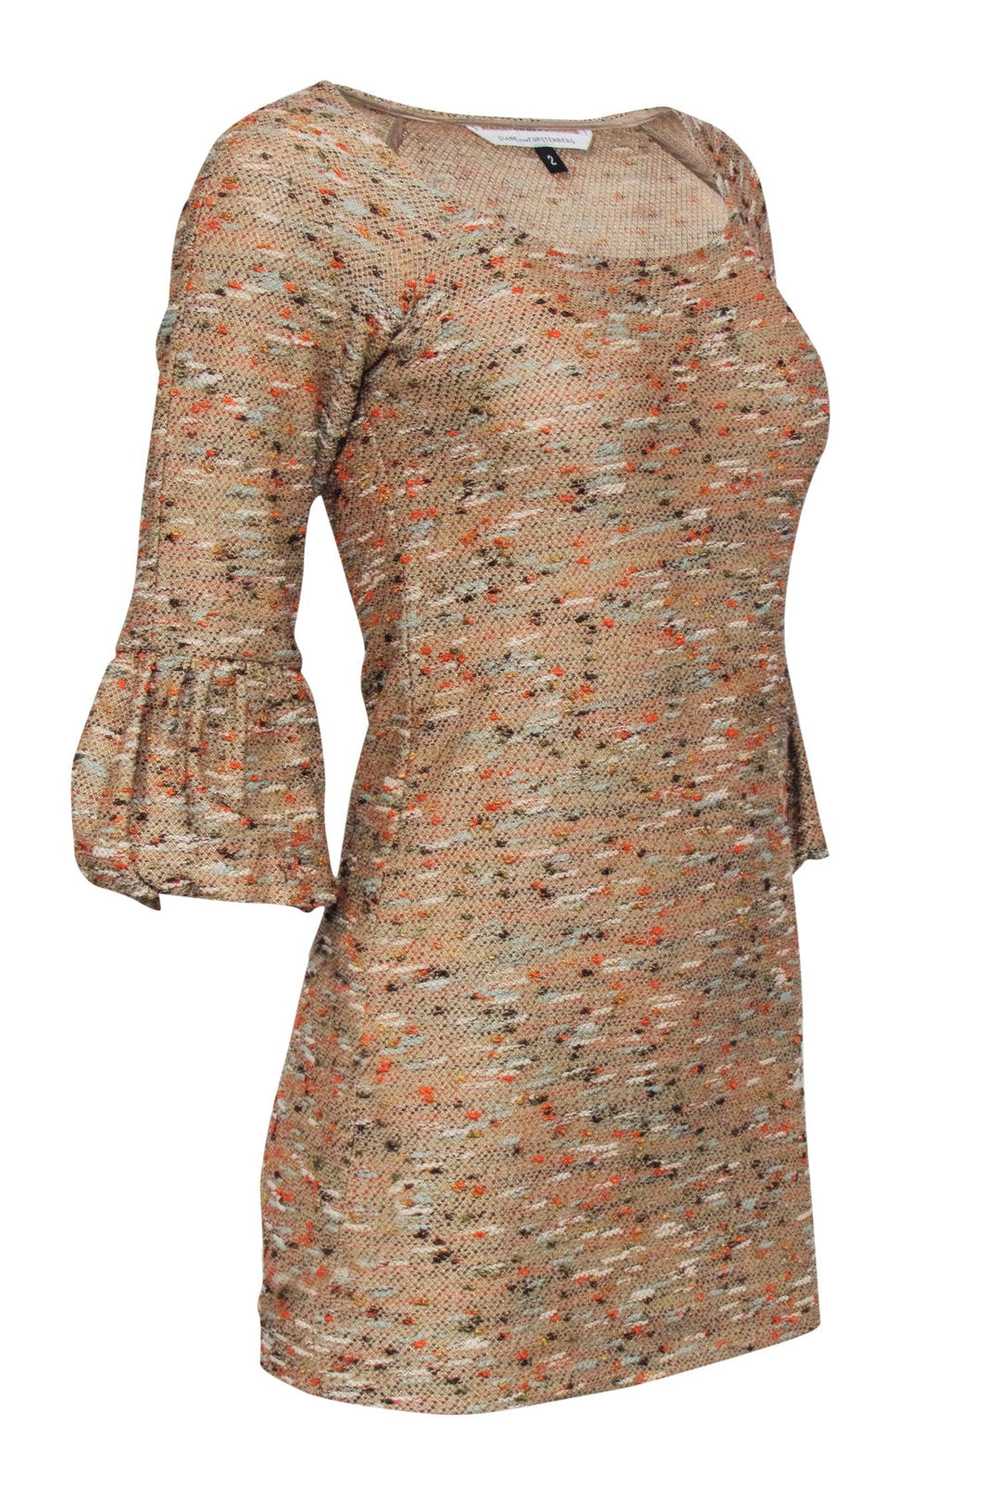 Diane von Furstenberg - Tan & Multi Color Tweed B… - image 2